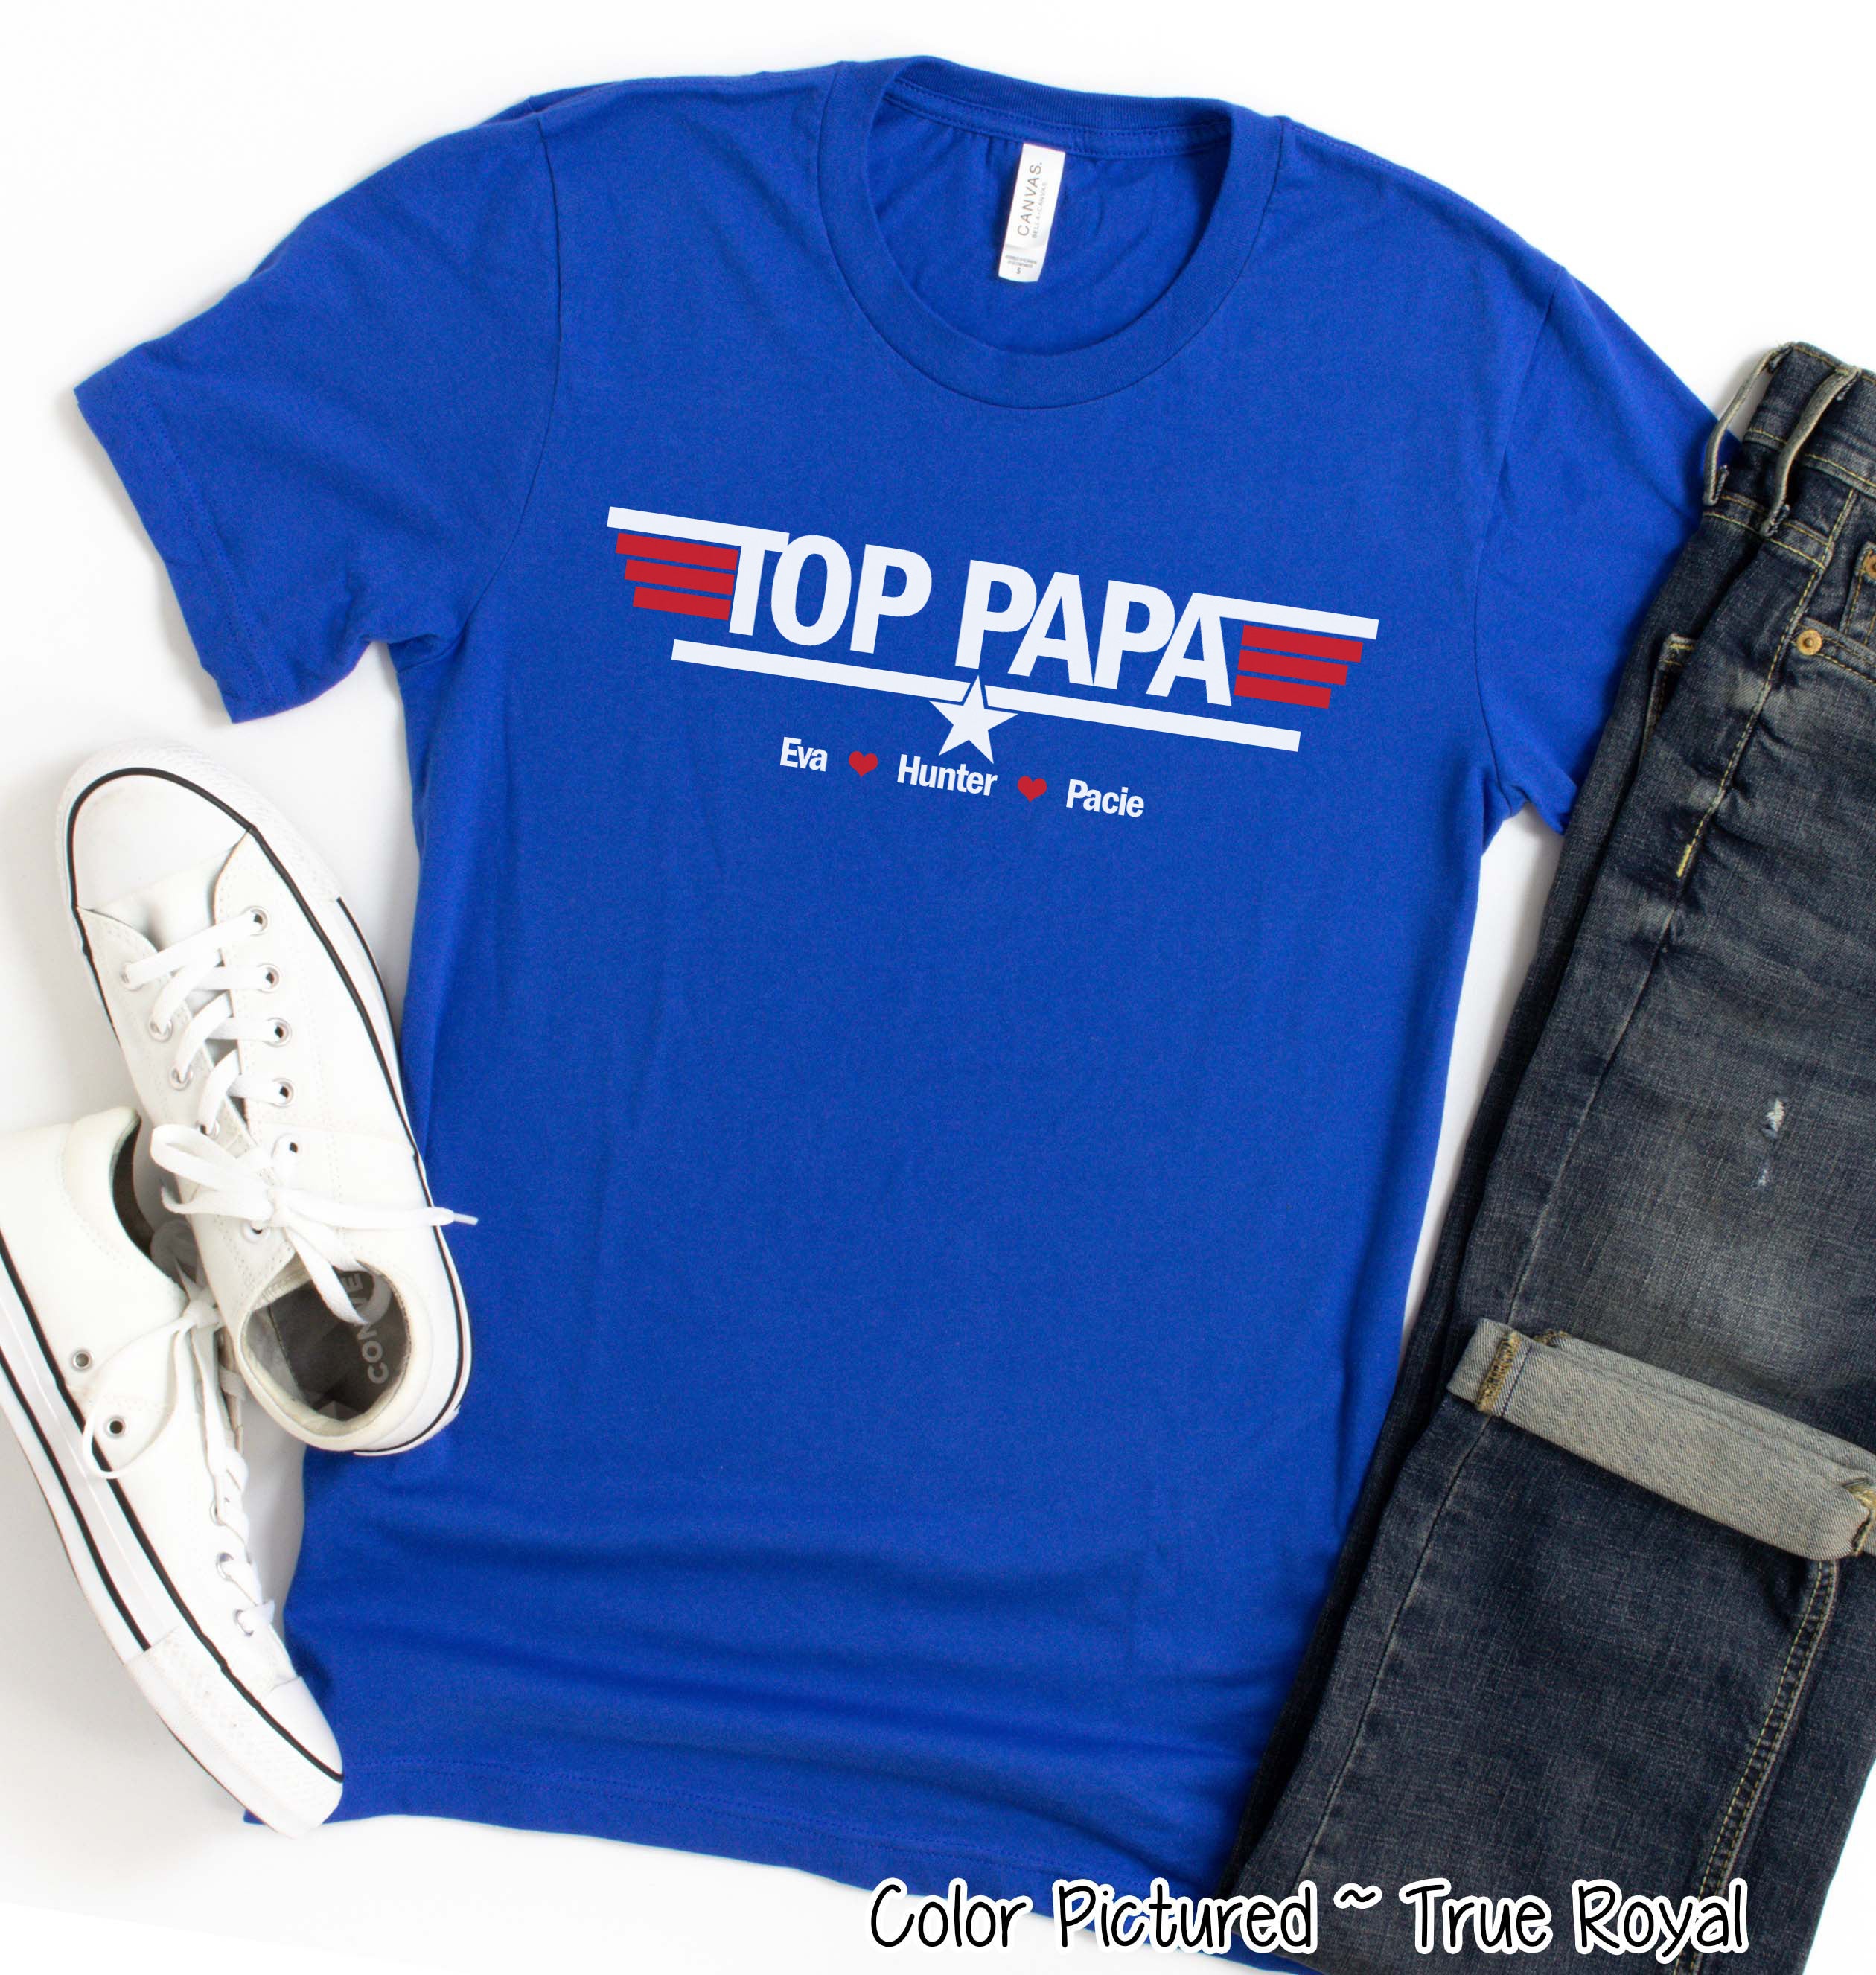 Top Dad-Top Papa Custom Tee